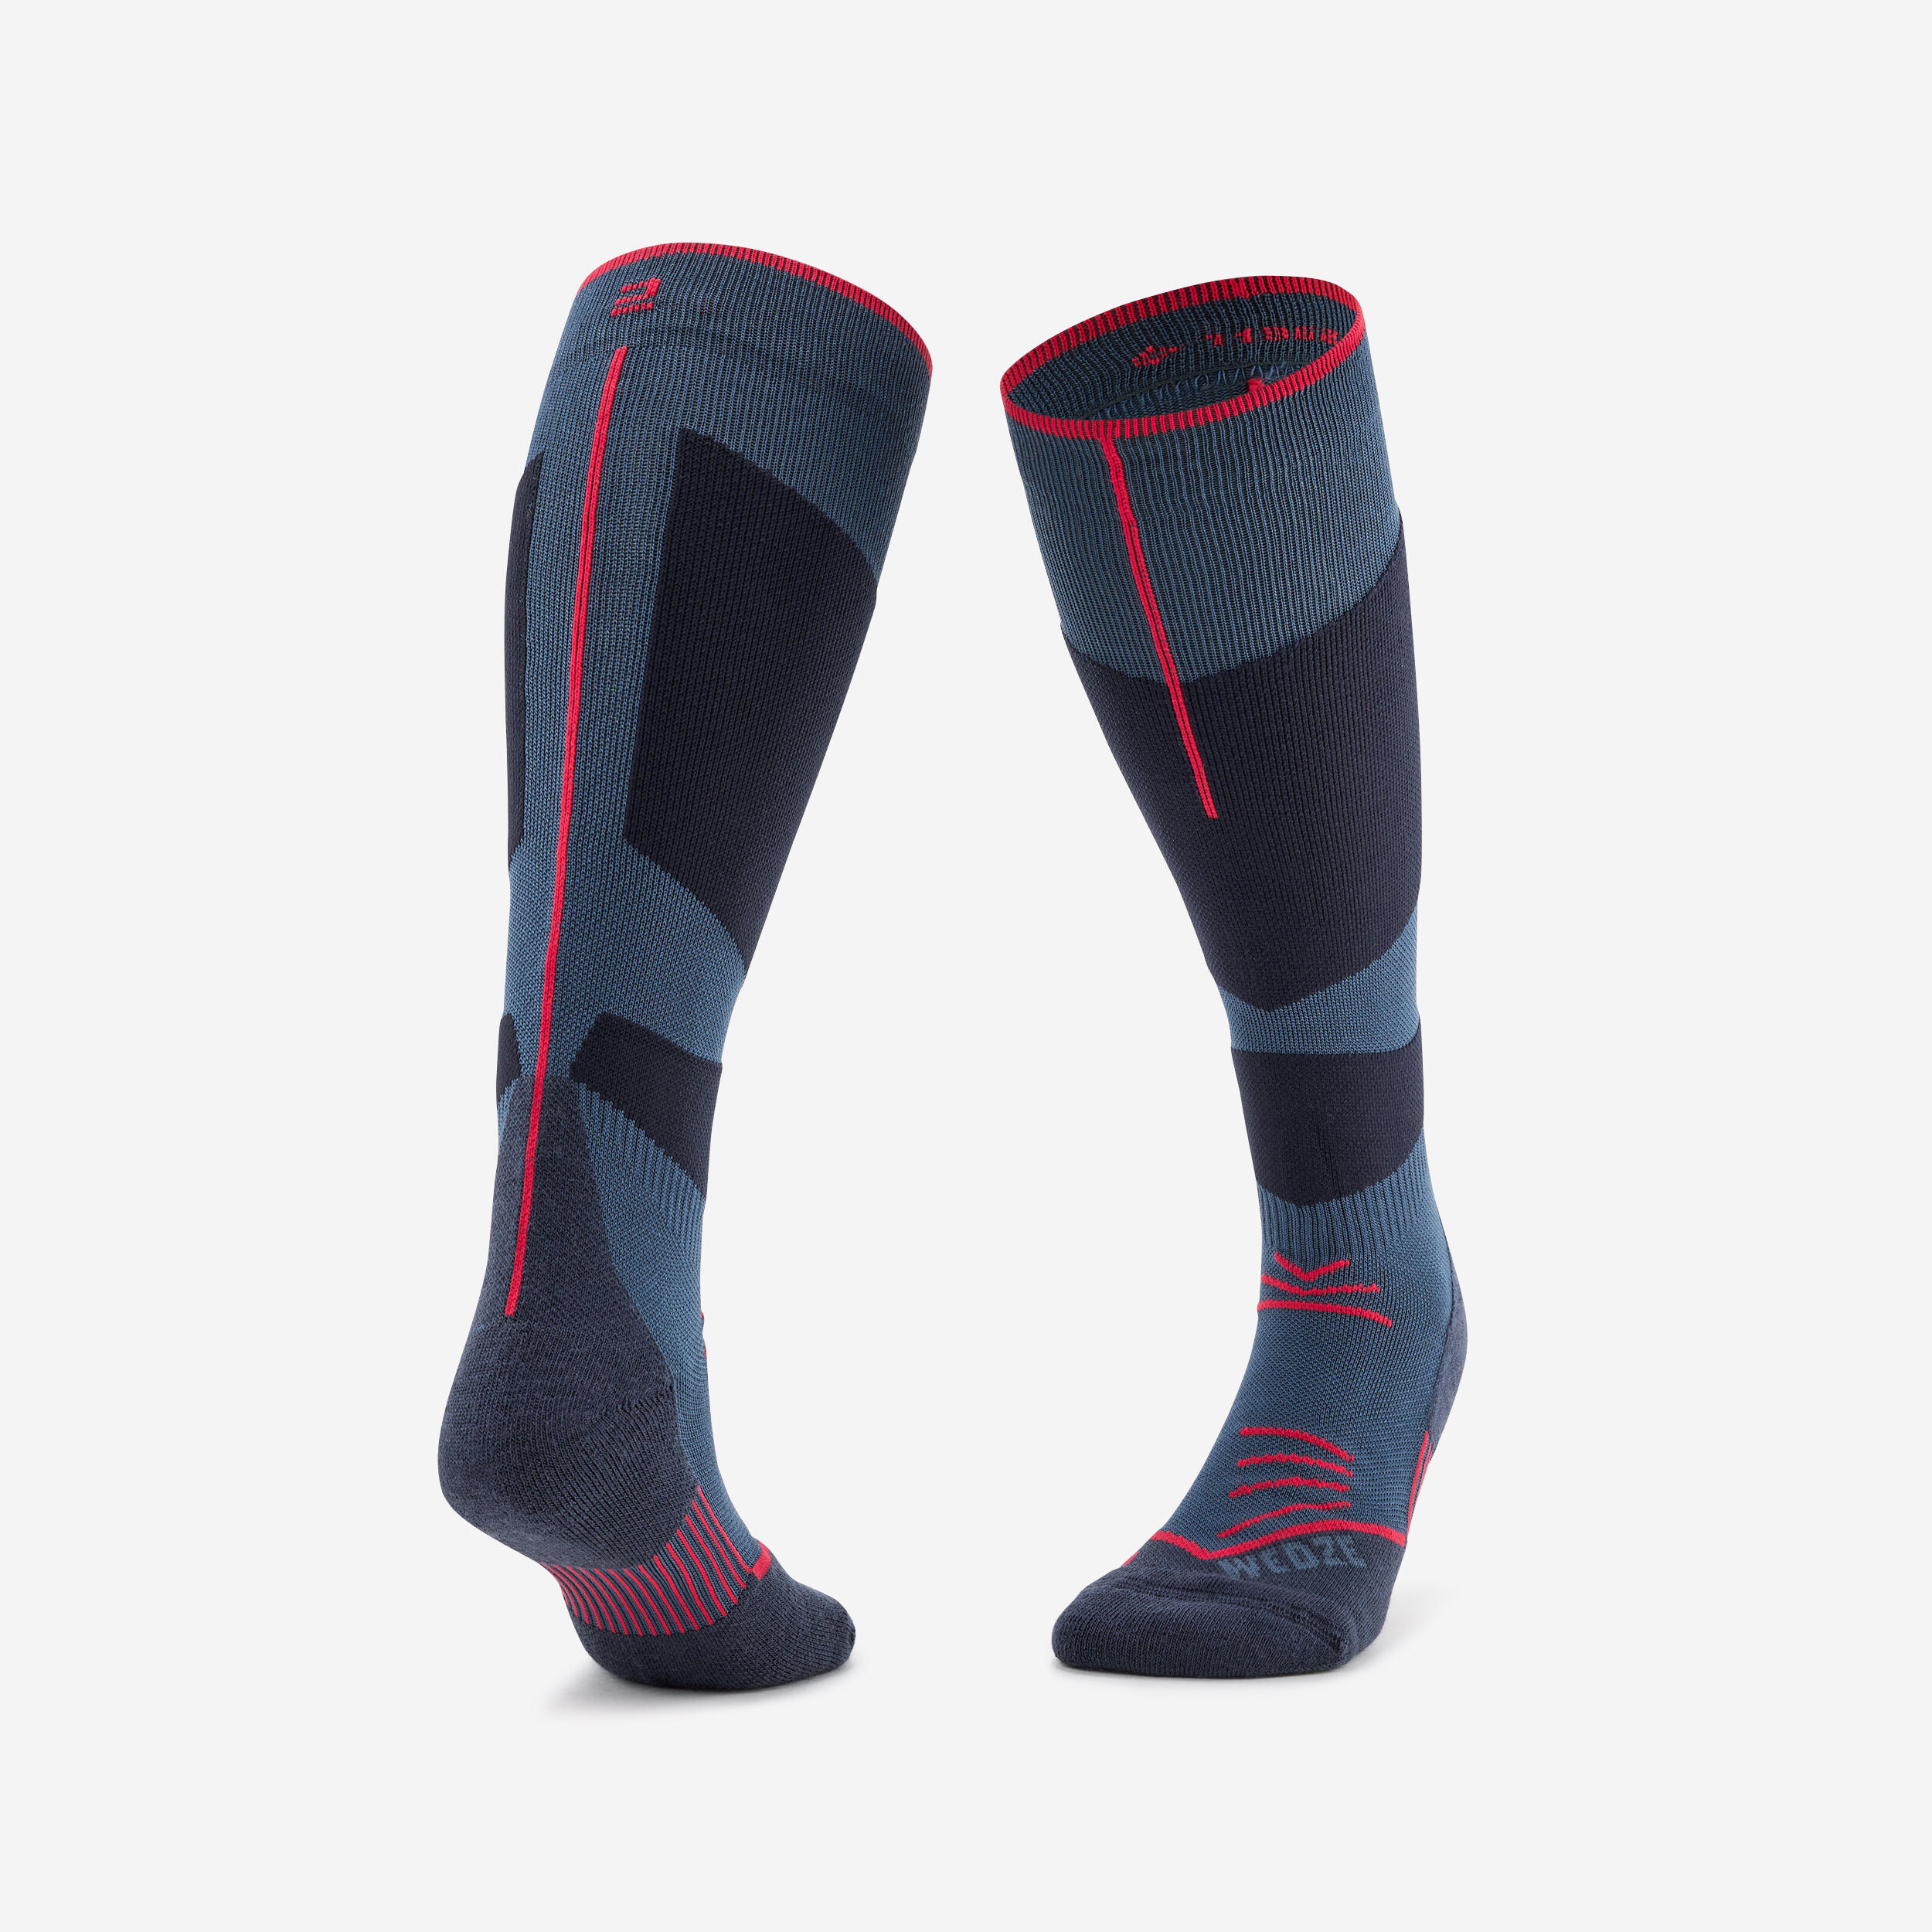 Men & Women's Ski Socks, Breathable, Comfy & Warm